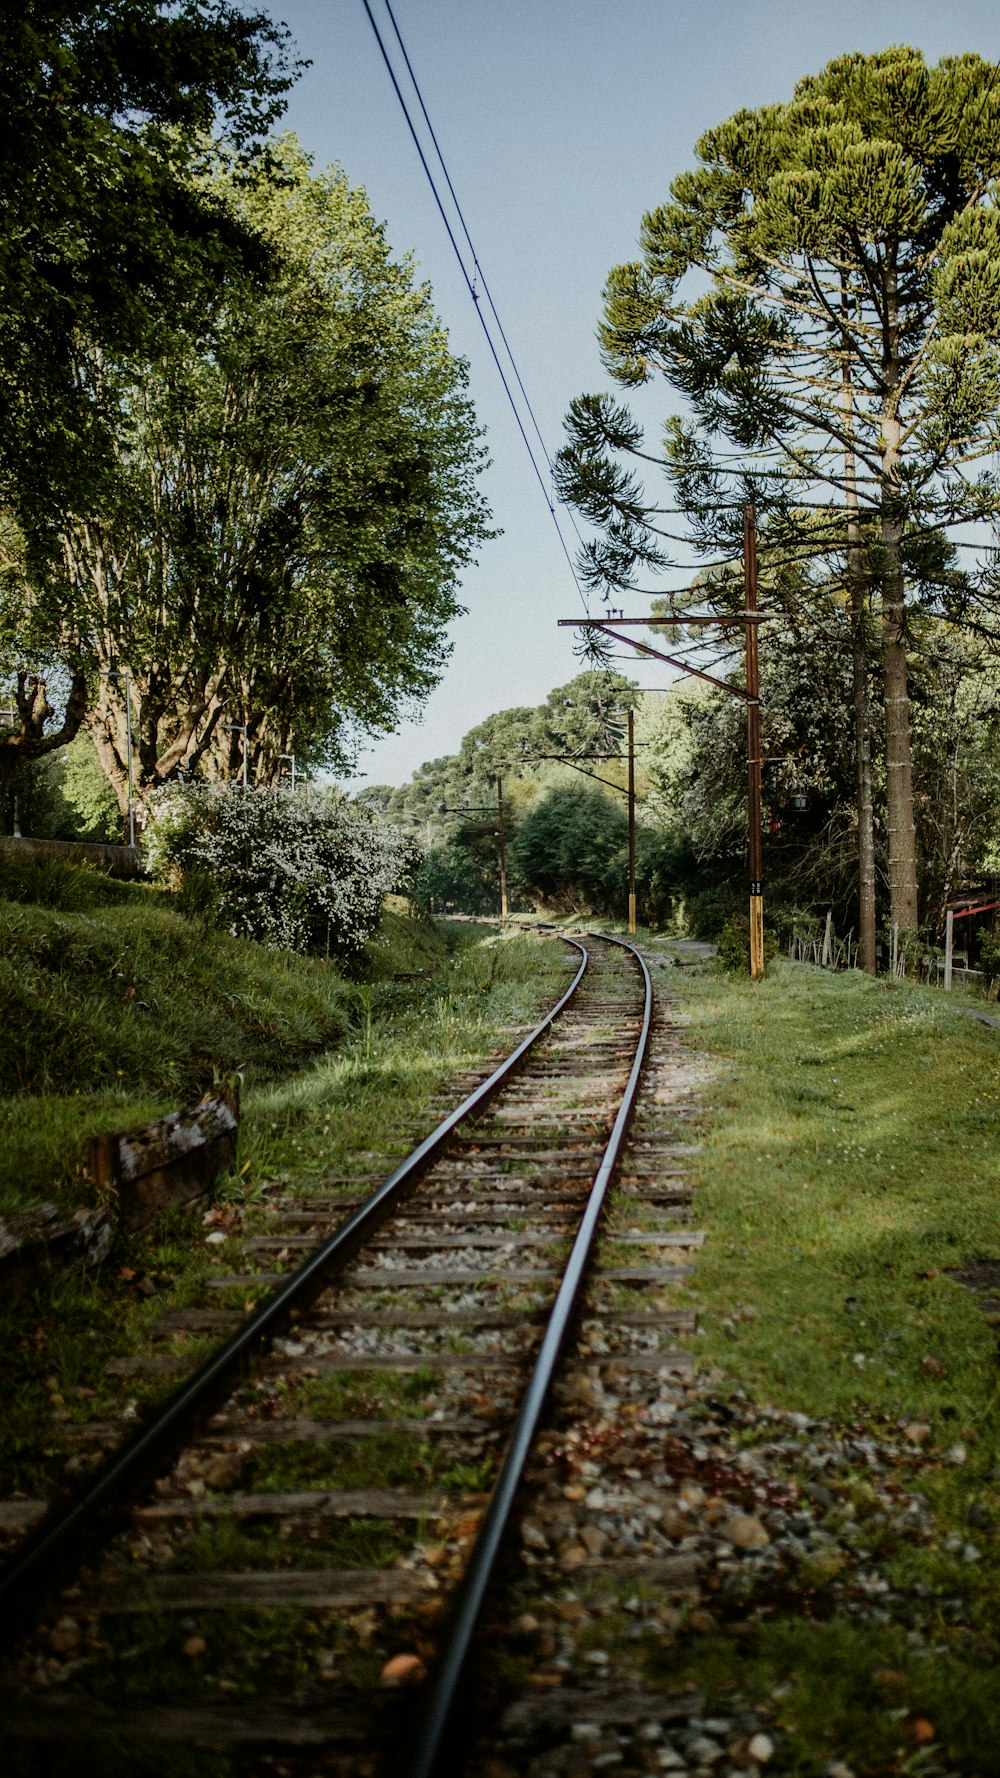 train rail near green grass field during daytime